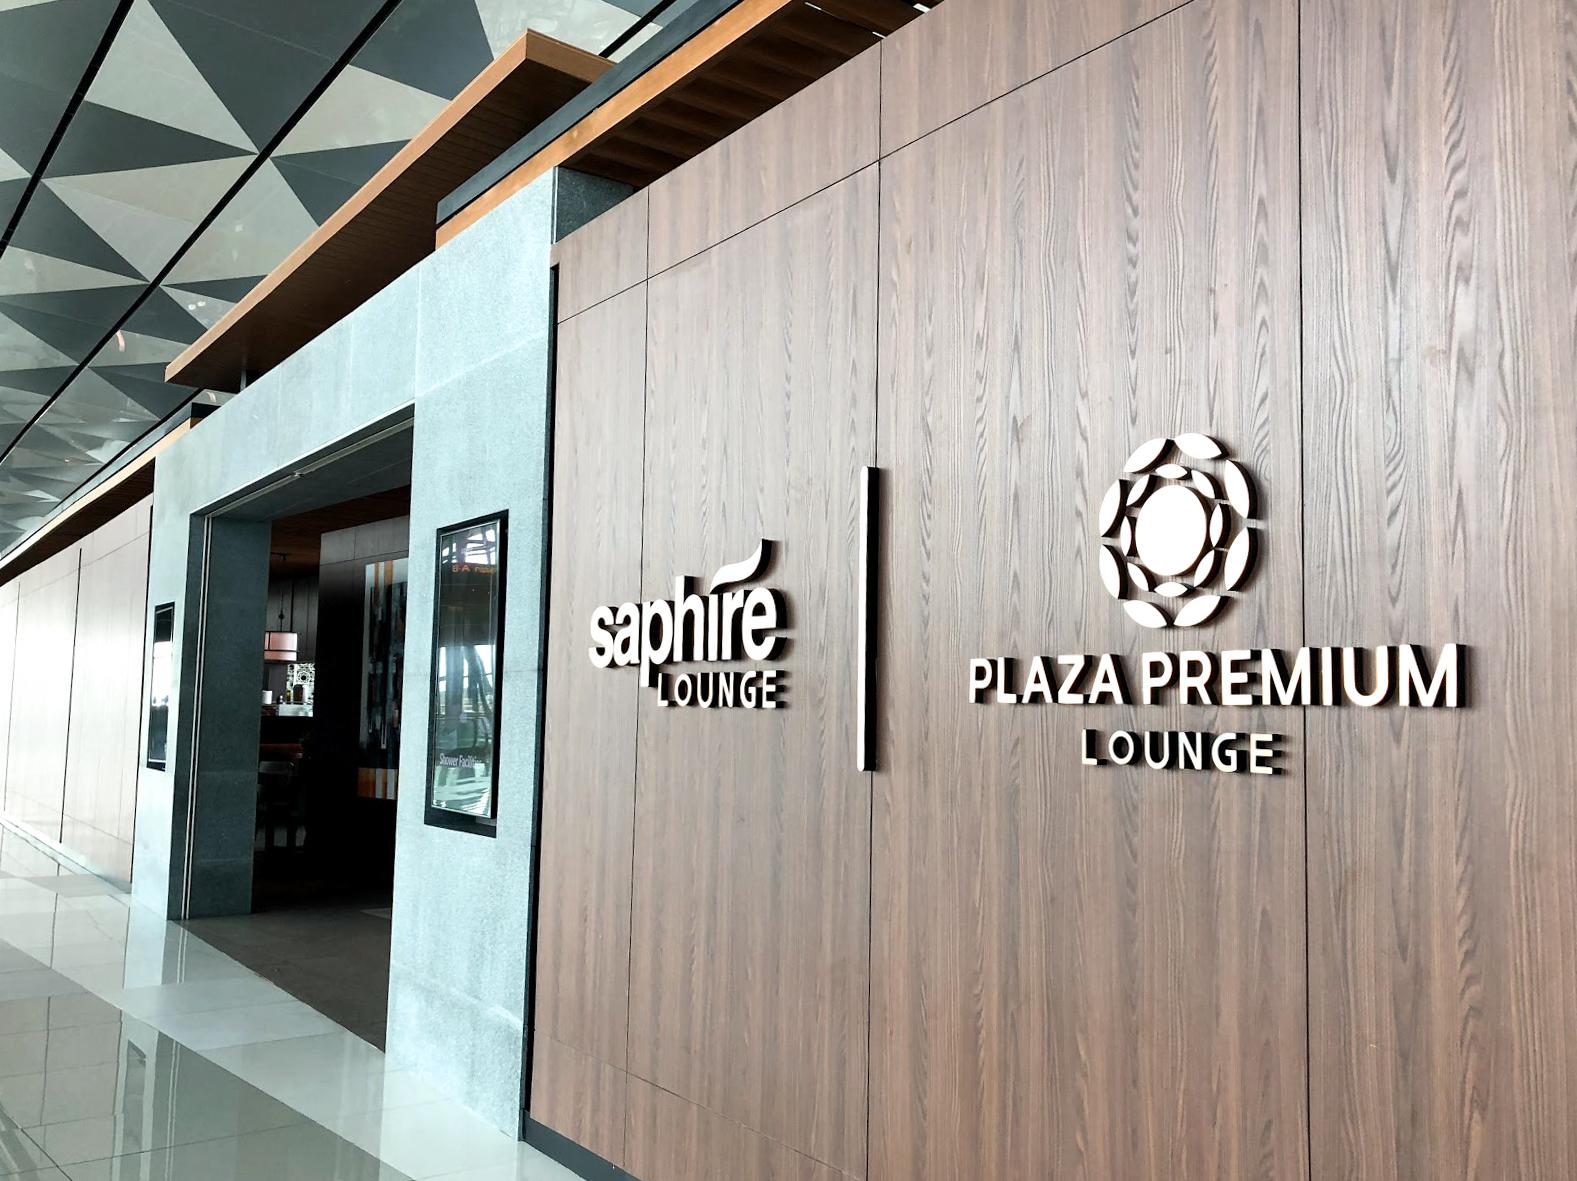 Plaza Premium Saphire Lounge Jakarta entrance